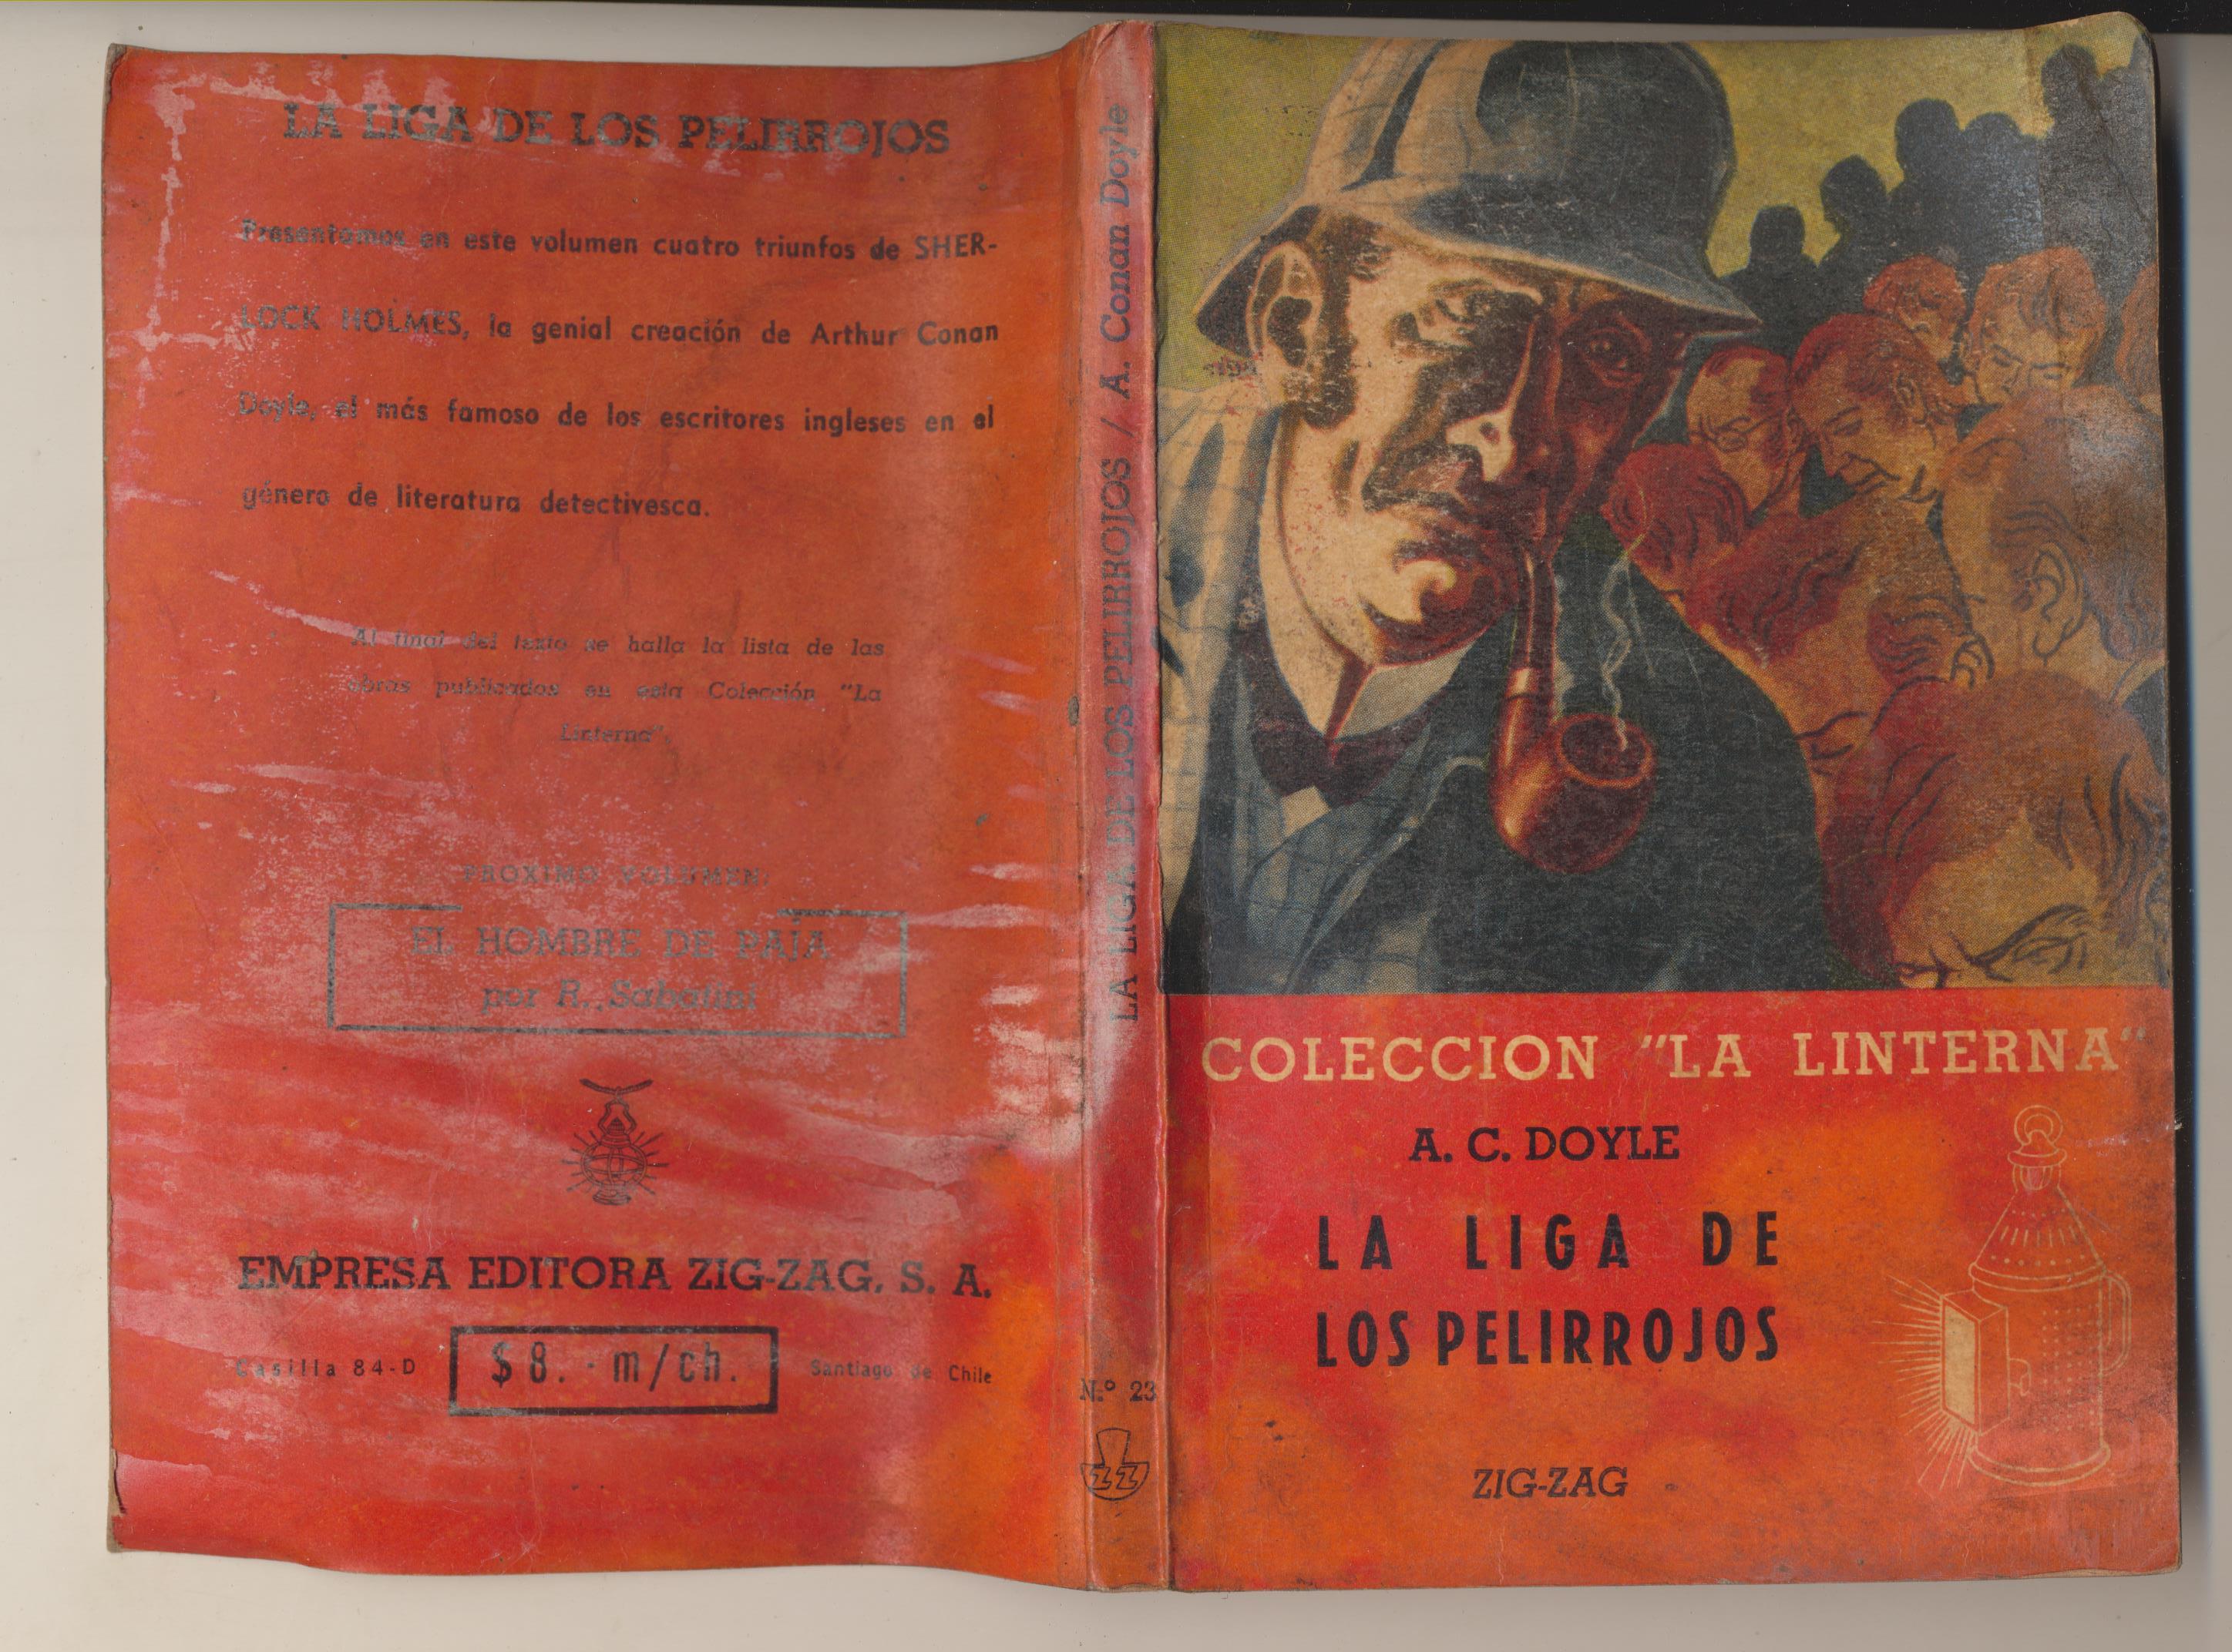 La Linterna nº 23. A. C. Doyle. La liga de los pelirrojos. Zig-Zag, Chile 1945